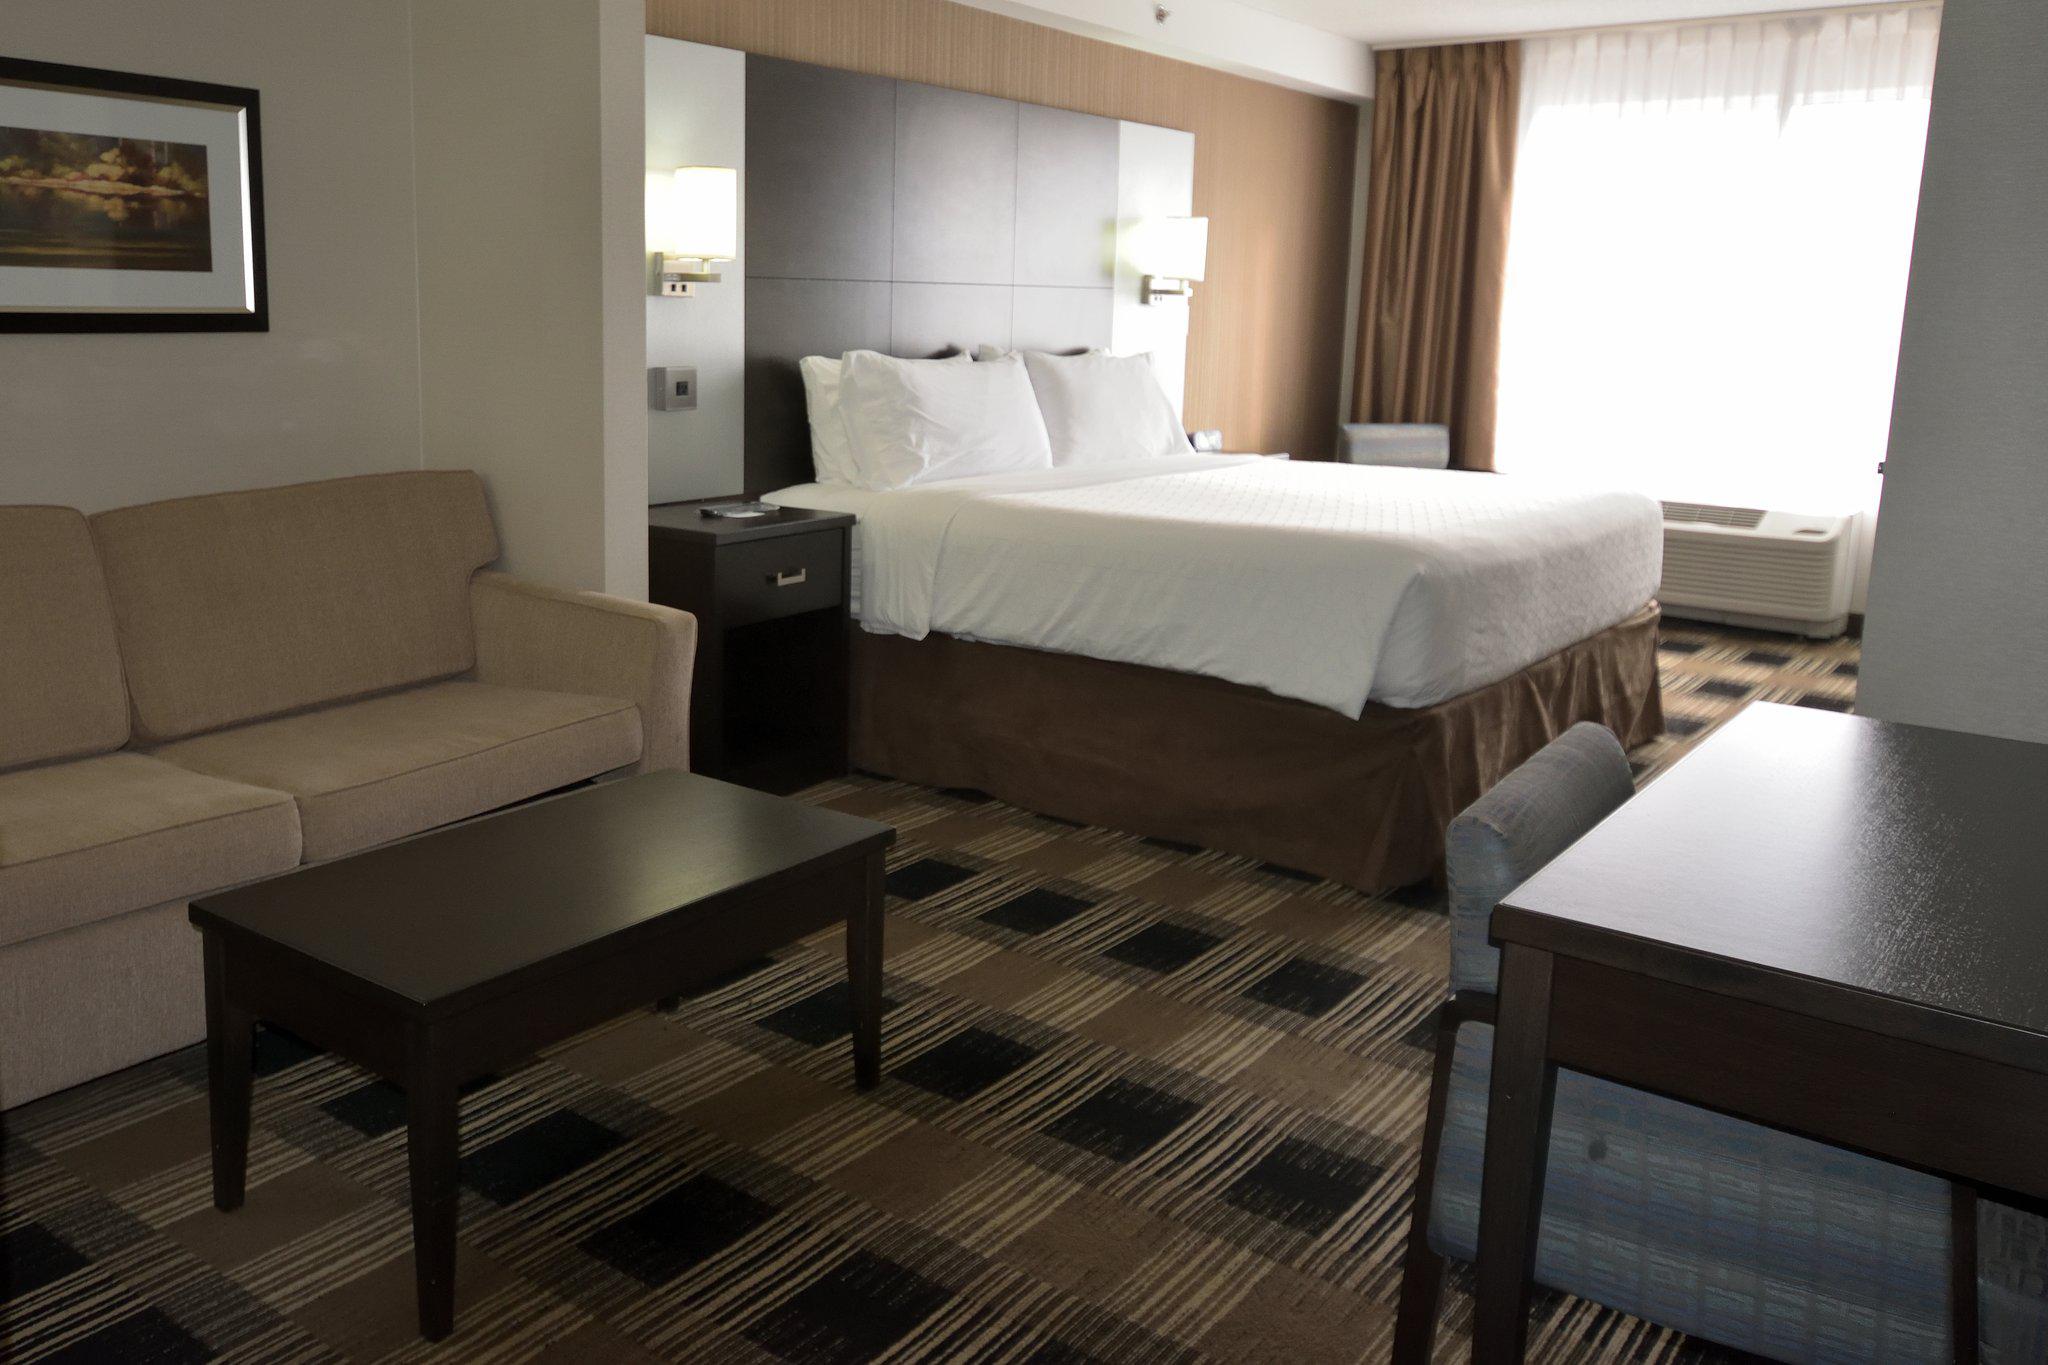 Holiday Inn Express & Suites Ottawa East - Orleans, an IHG Hotel Ottawa (613)824-8444